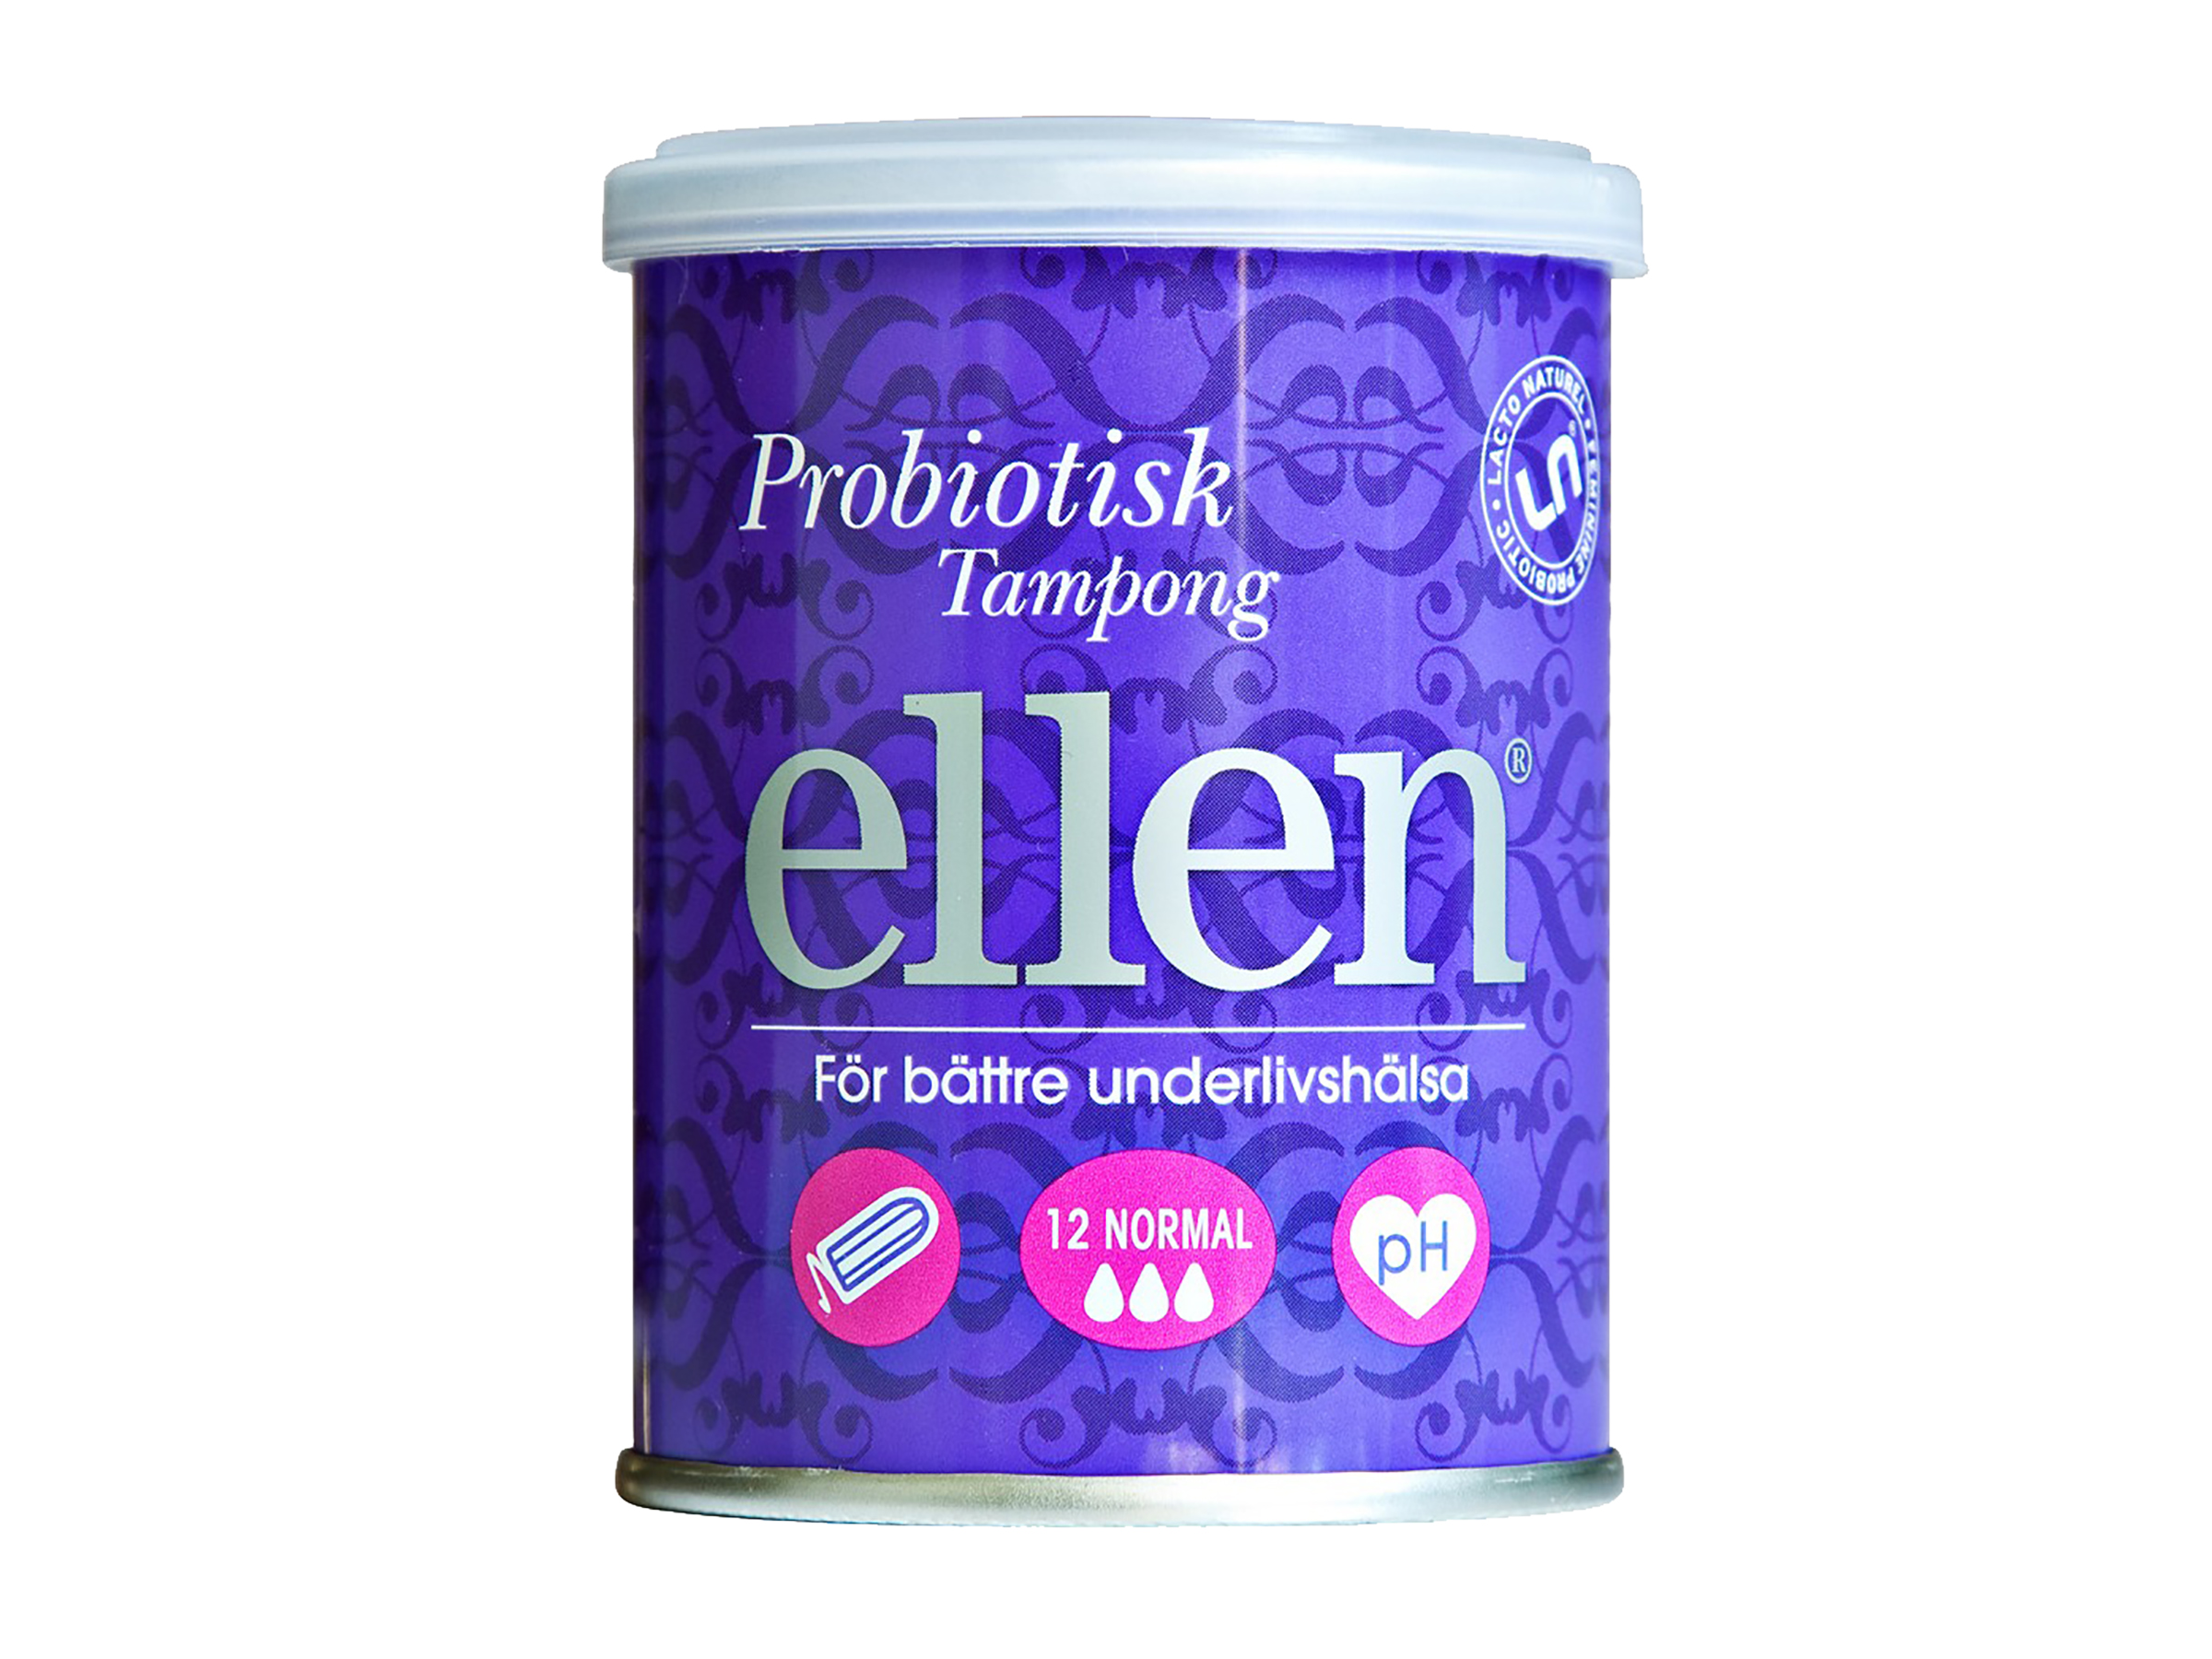 Ellen Ellen Probiotisk tampong normal, 12 stk